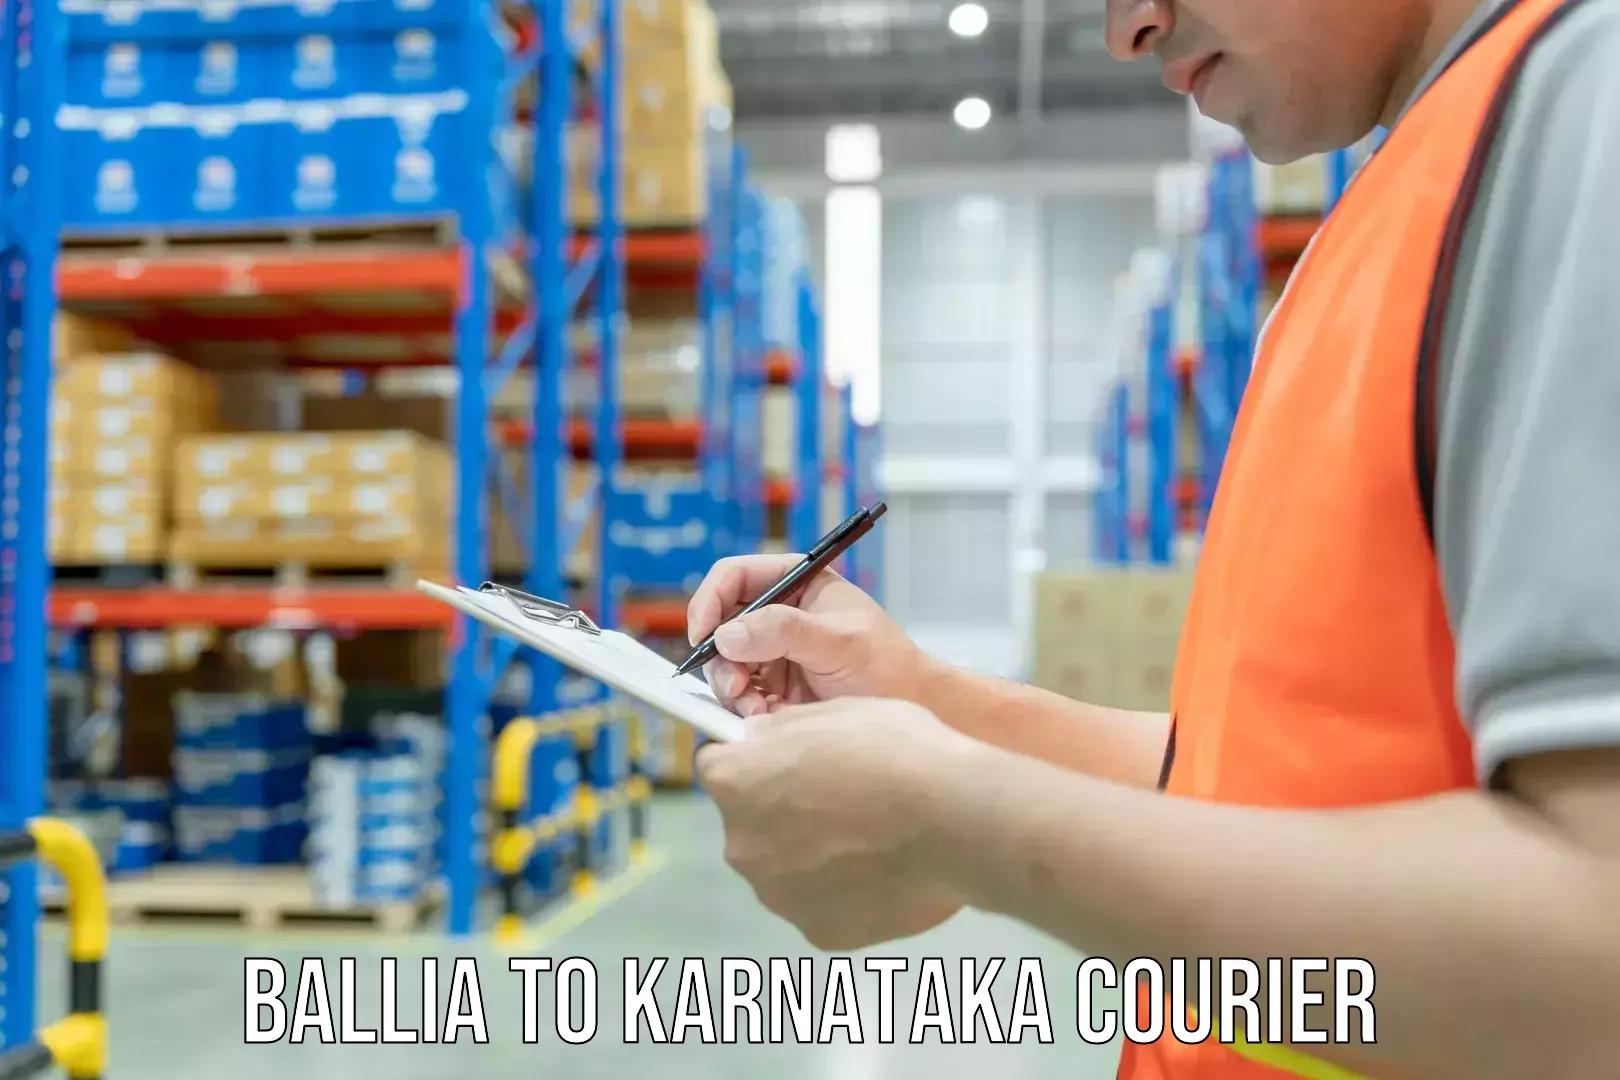 On-call courier service Ballia to Karnataka